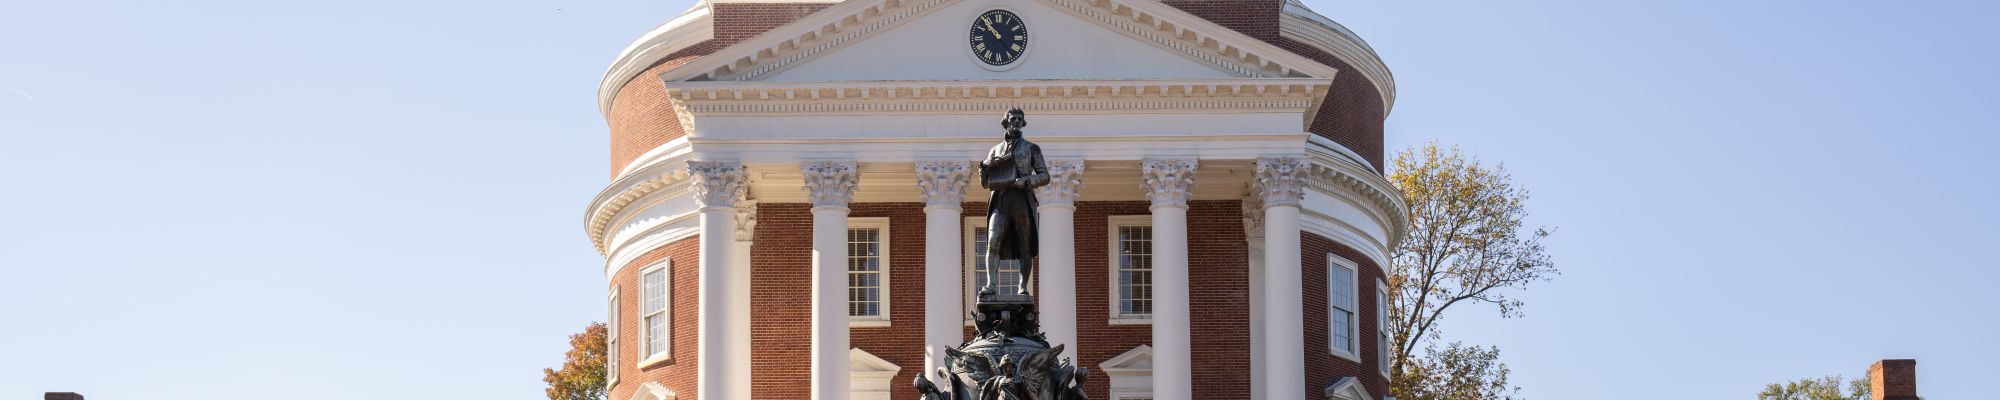 Rotunda and Thomas Jefferson statue